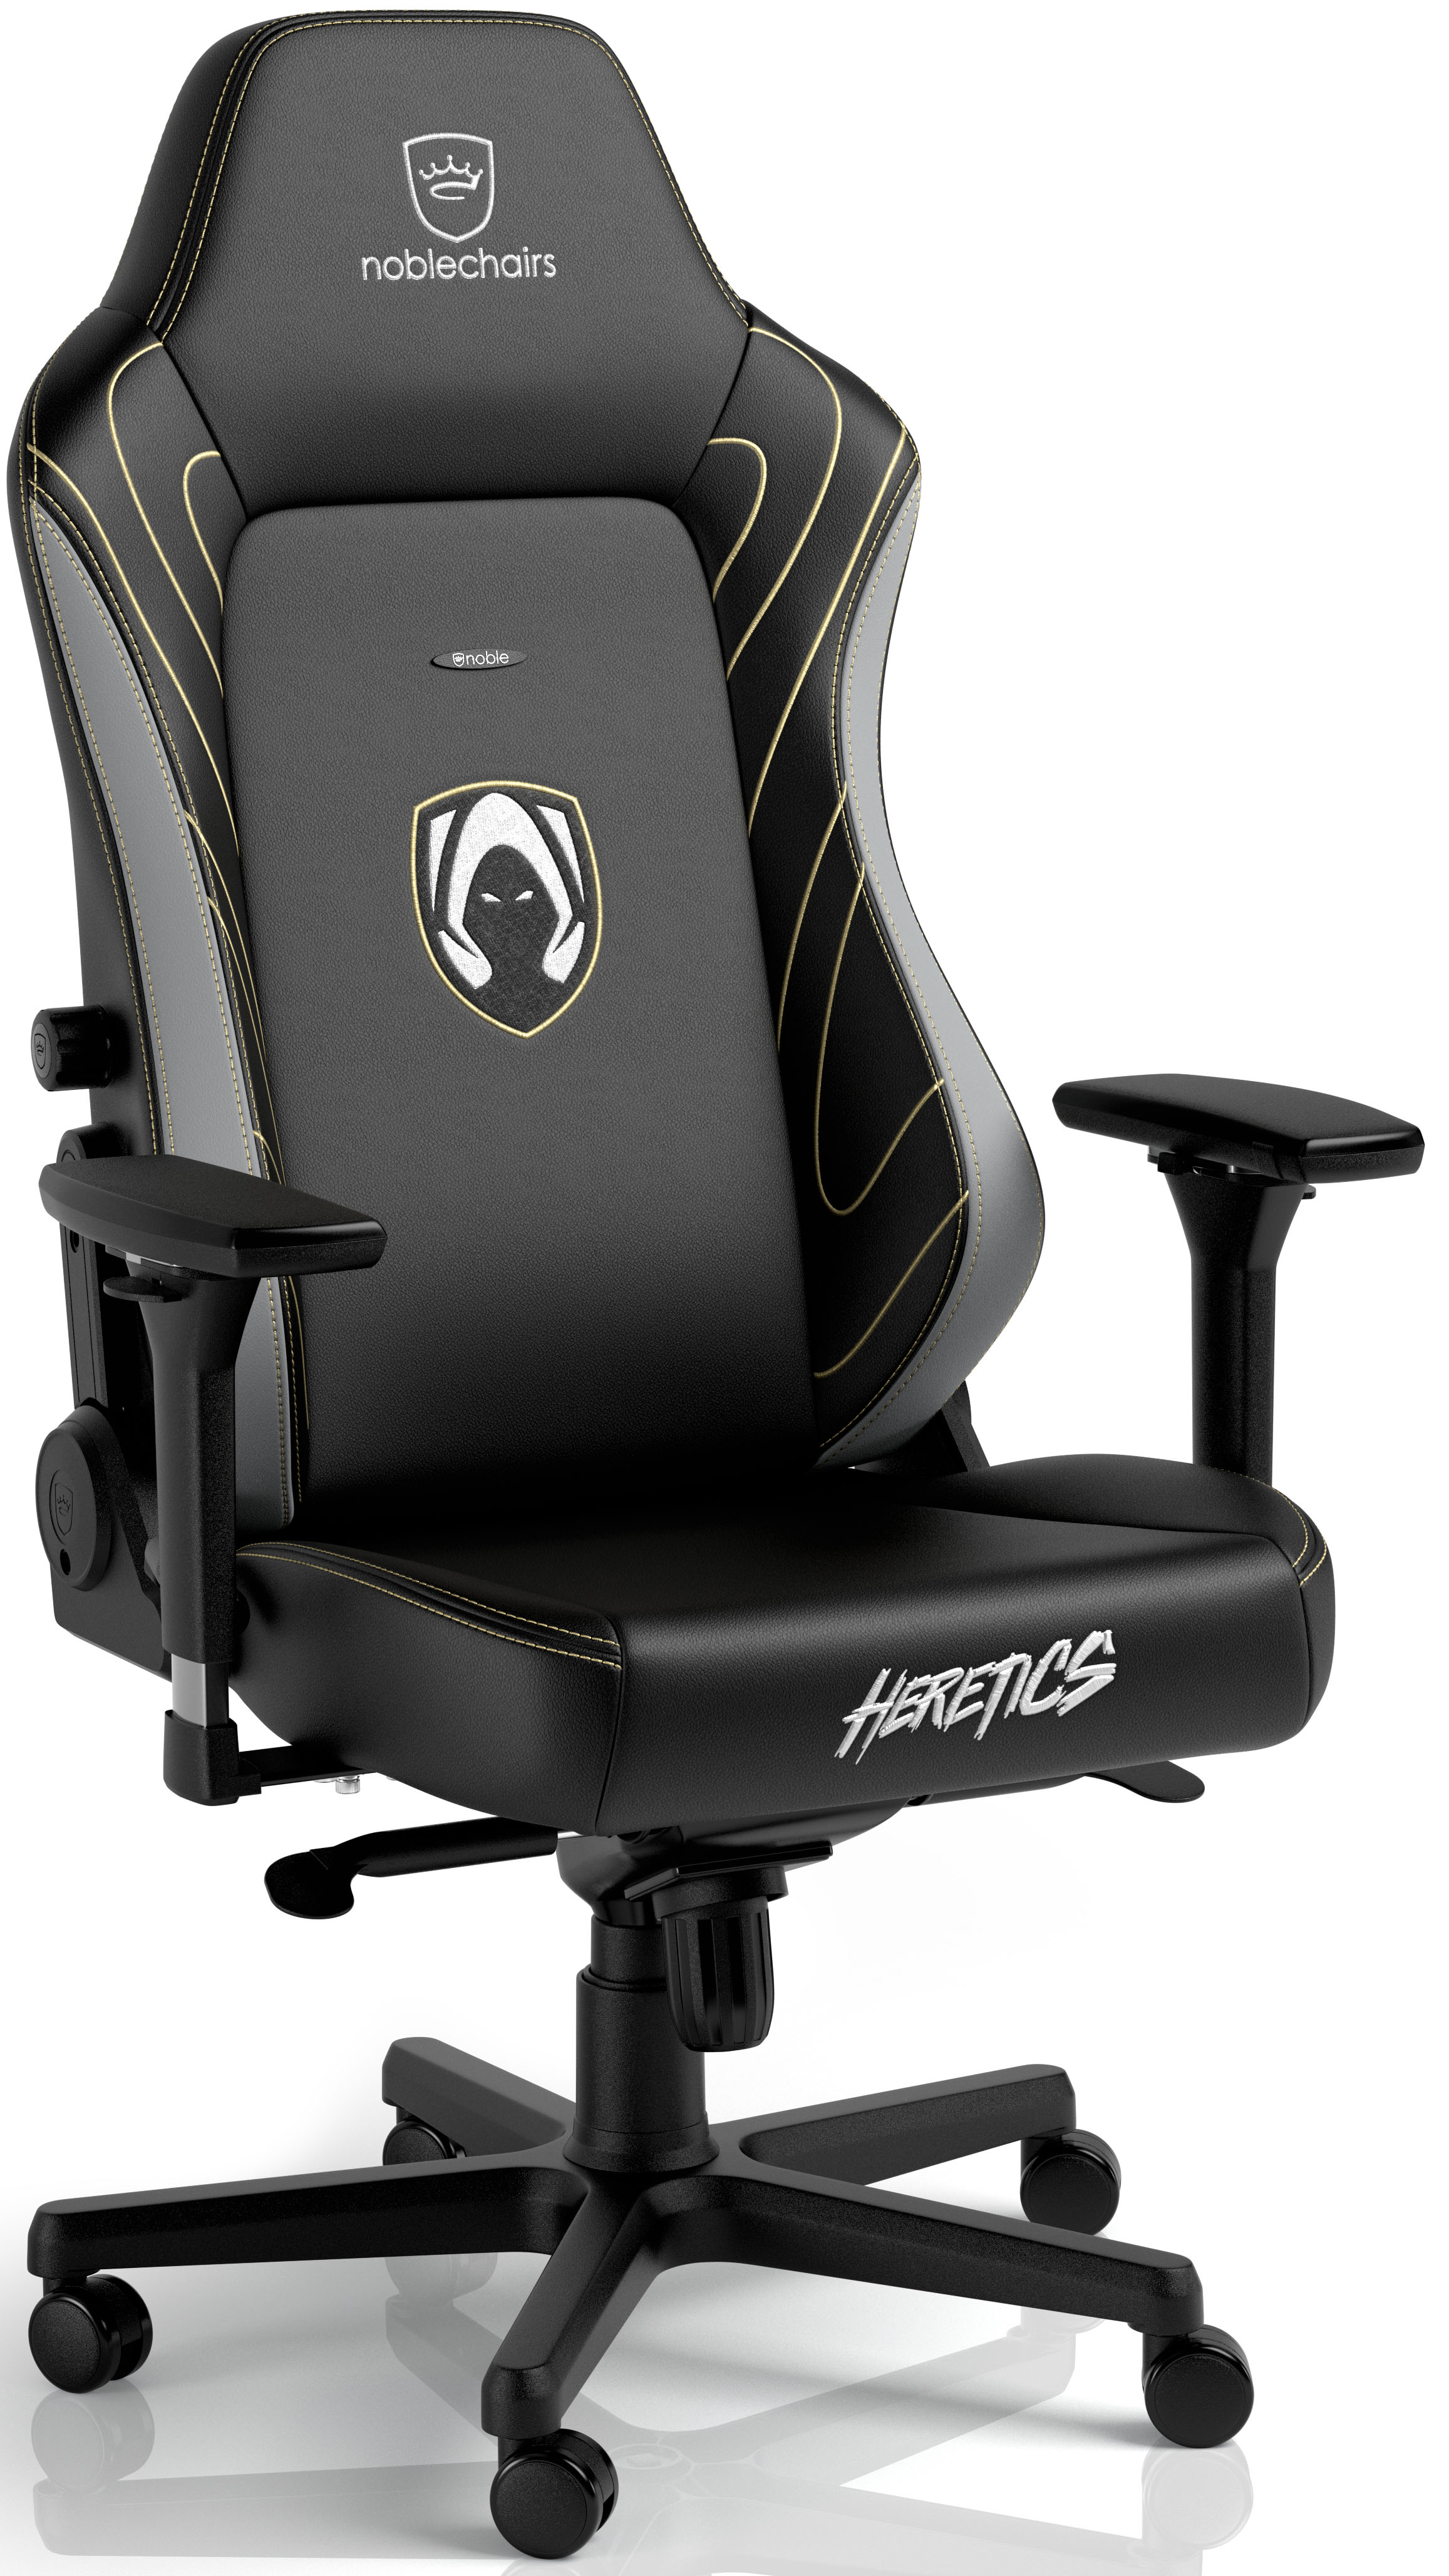 Cadeira noblechairs HERO - Team Herectics Edition